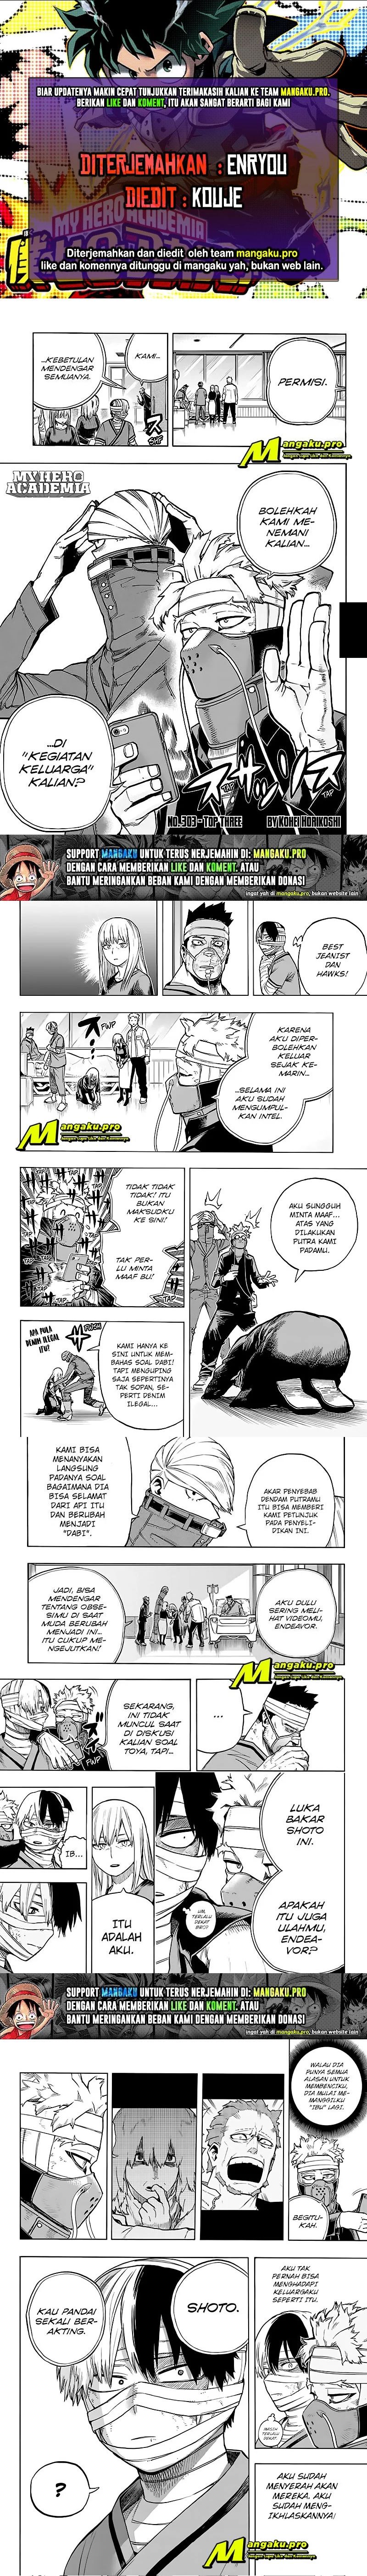 Boku no Hero Academia: Chapter 303 - Page 1